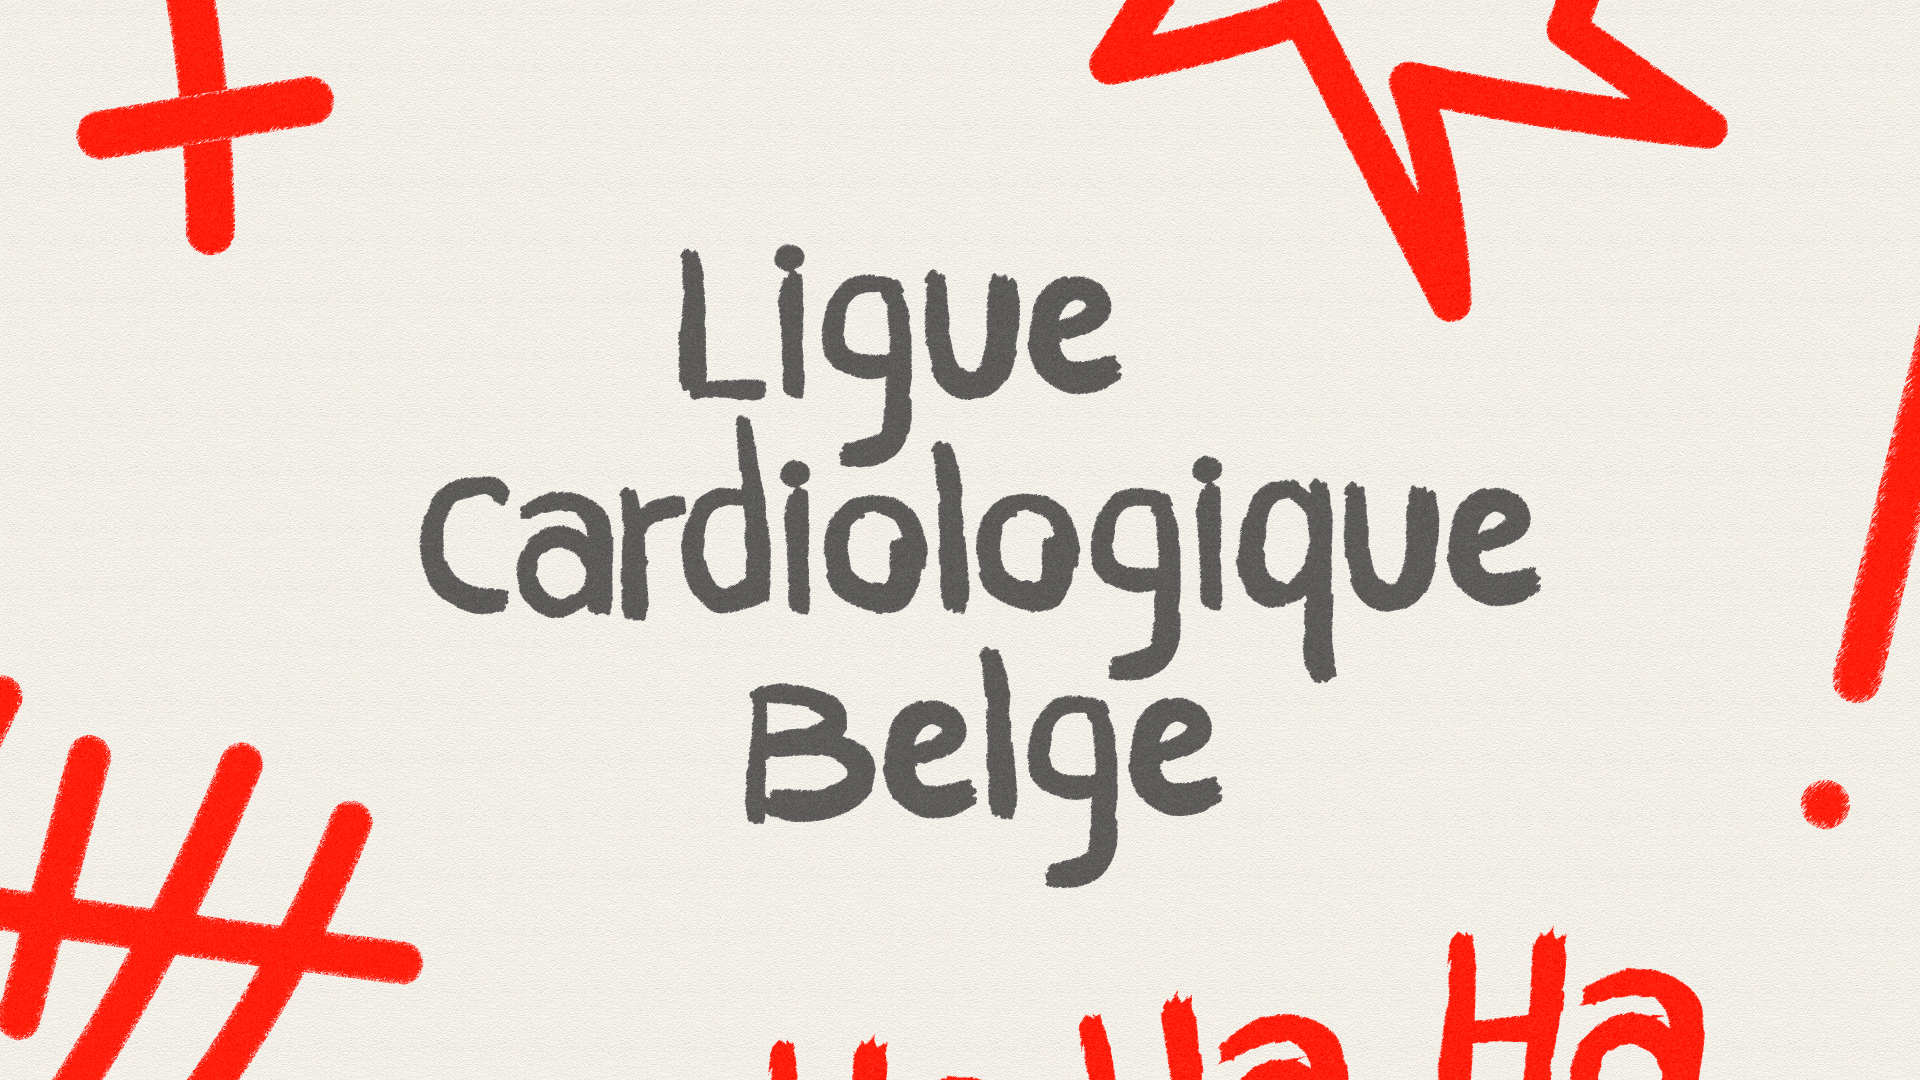 Ligue cardiologique belge